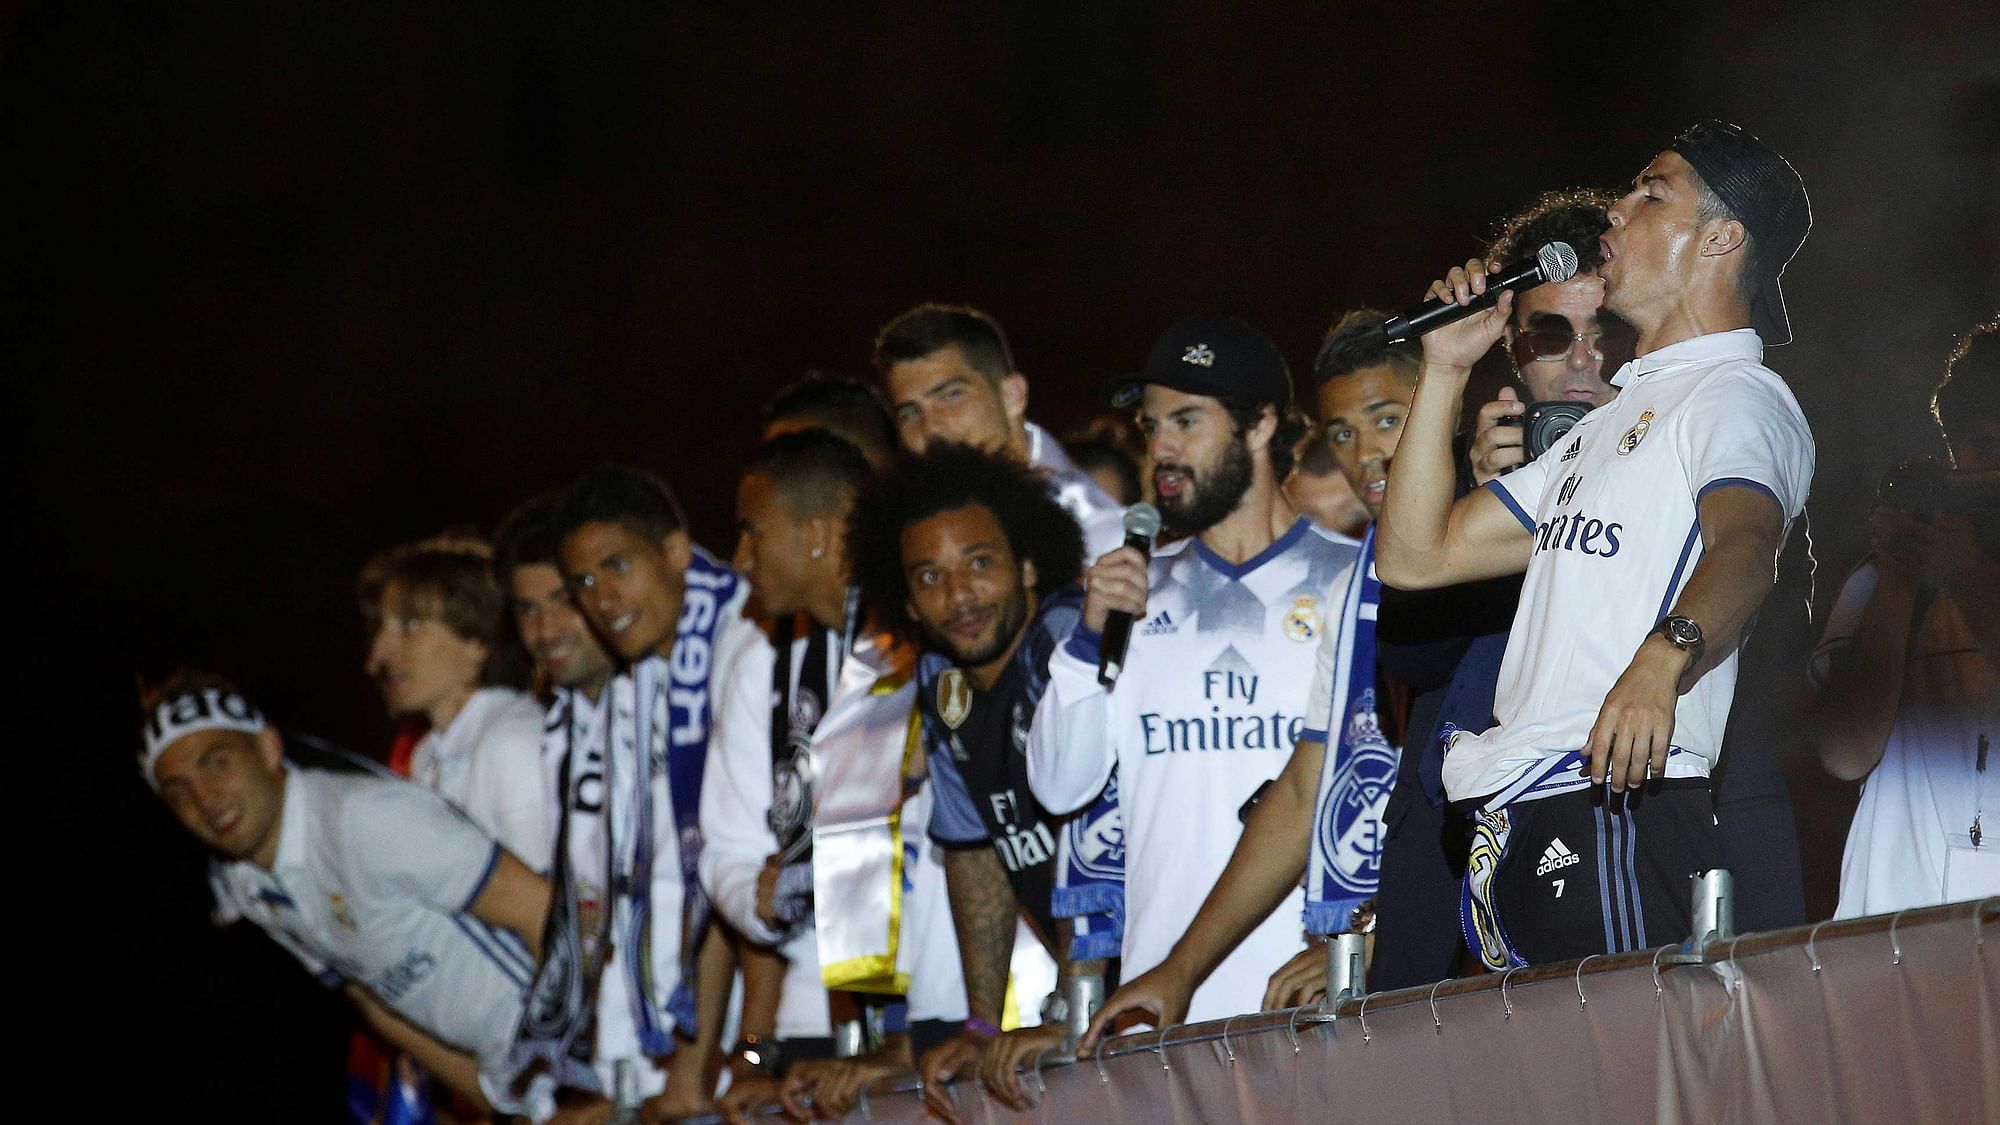 Real Madrid’s Cristiano Ronaldo (R) celebrates with team-mates in Cibeles square after Real Madrid won the La Liga title. (Photo: Reuters)